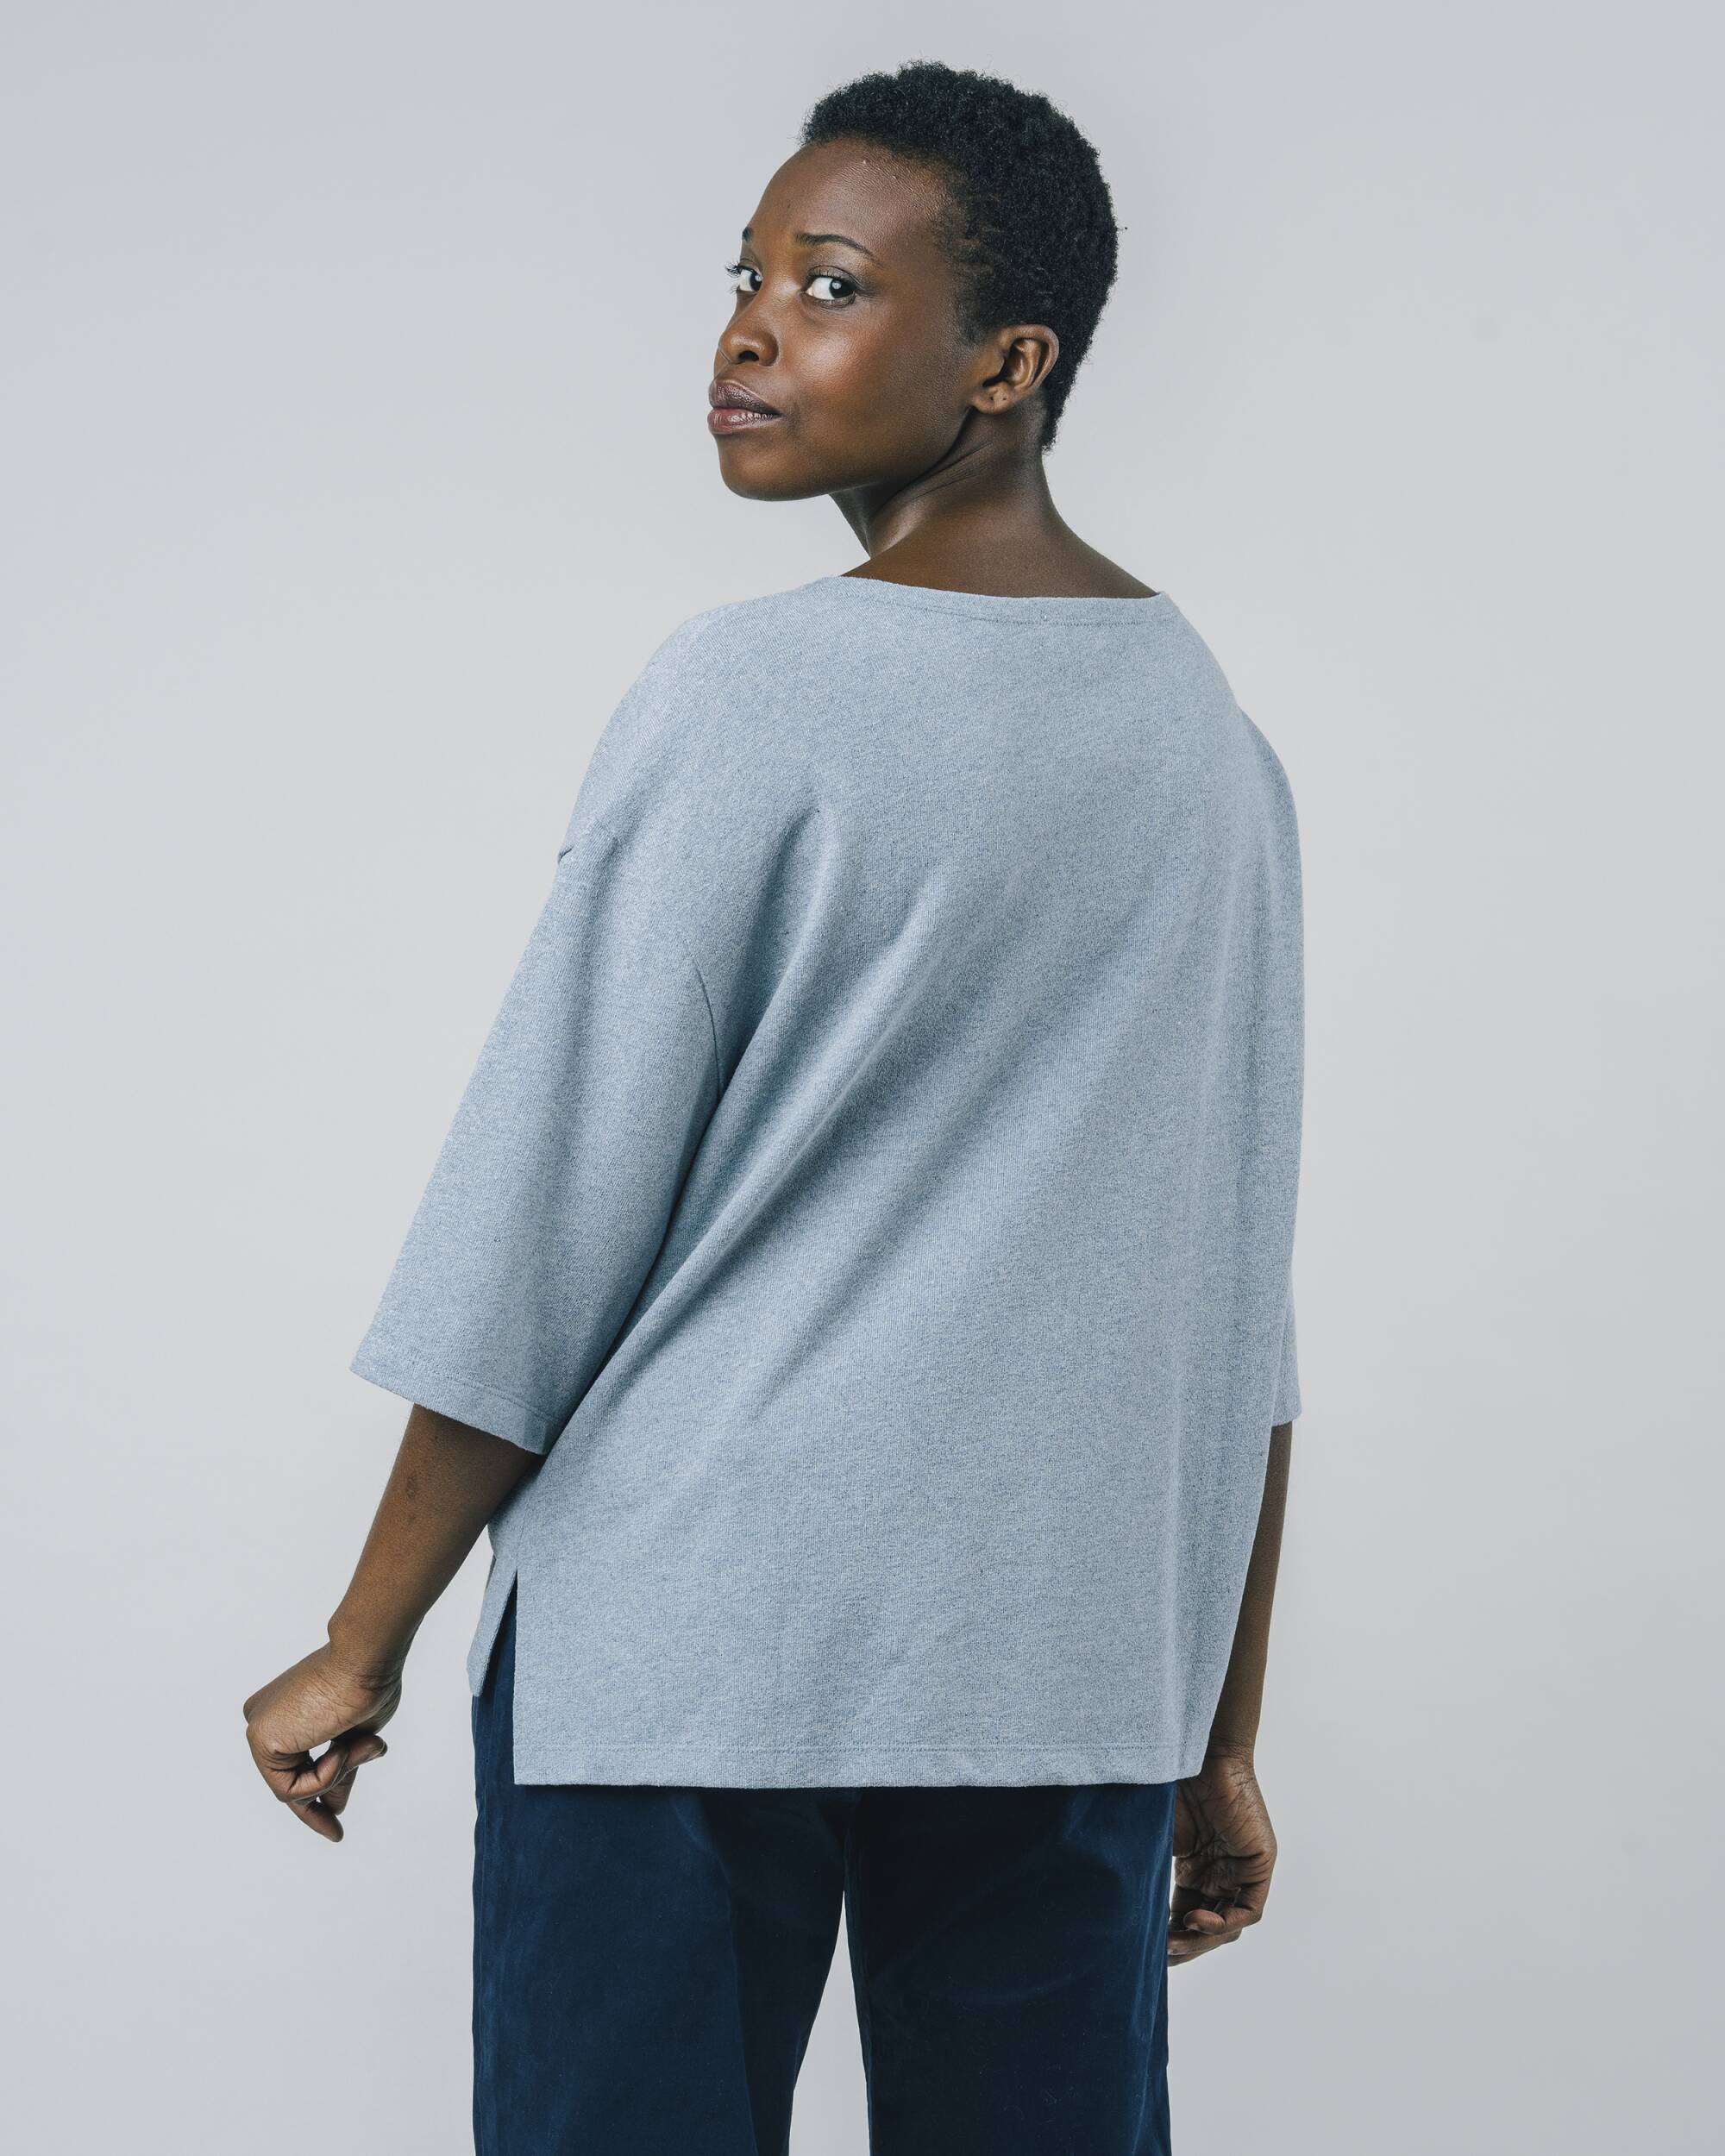 Blue Kibibi sweater made of mixed fibers from Brava Fabrics